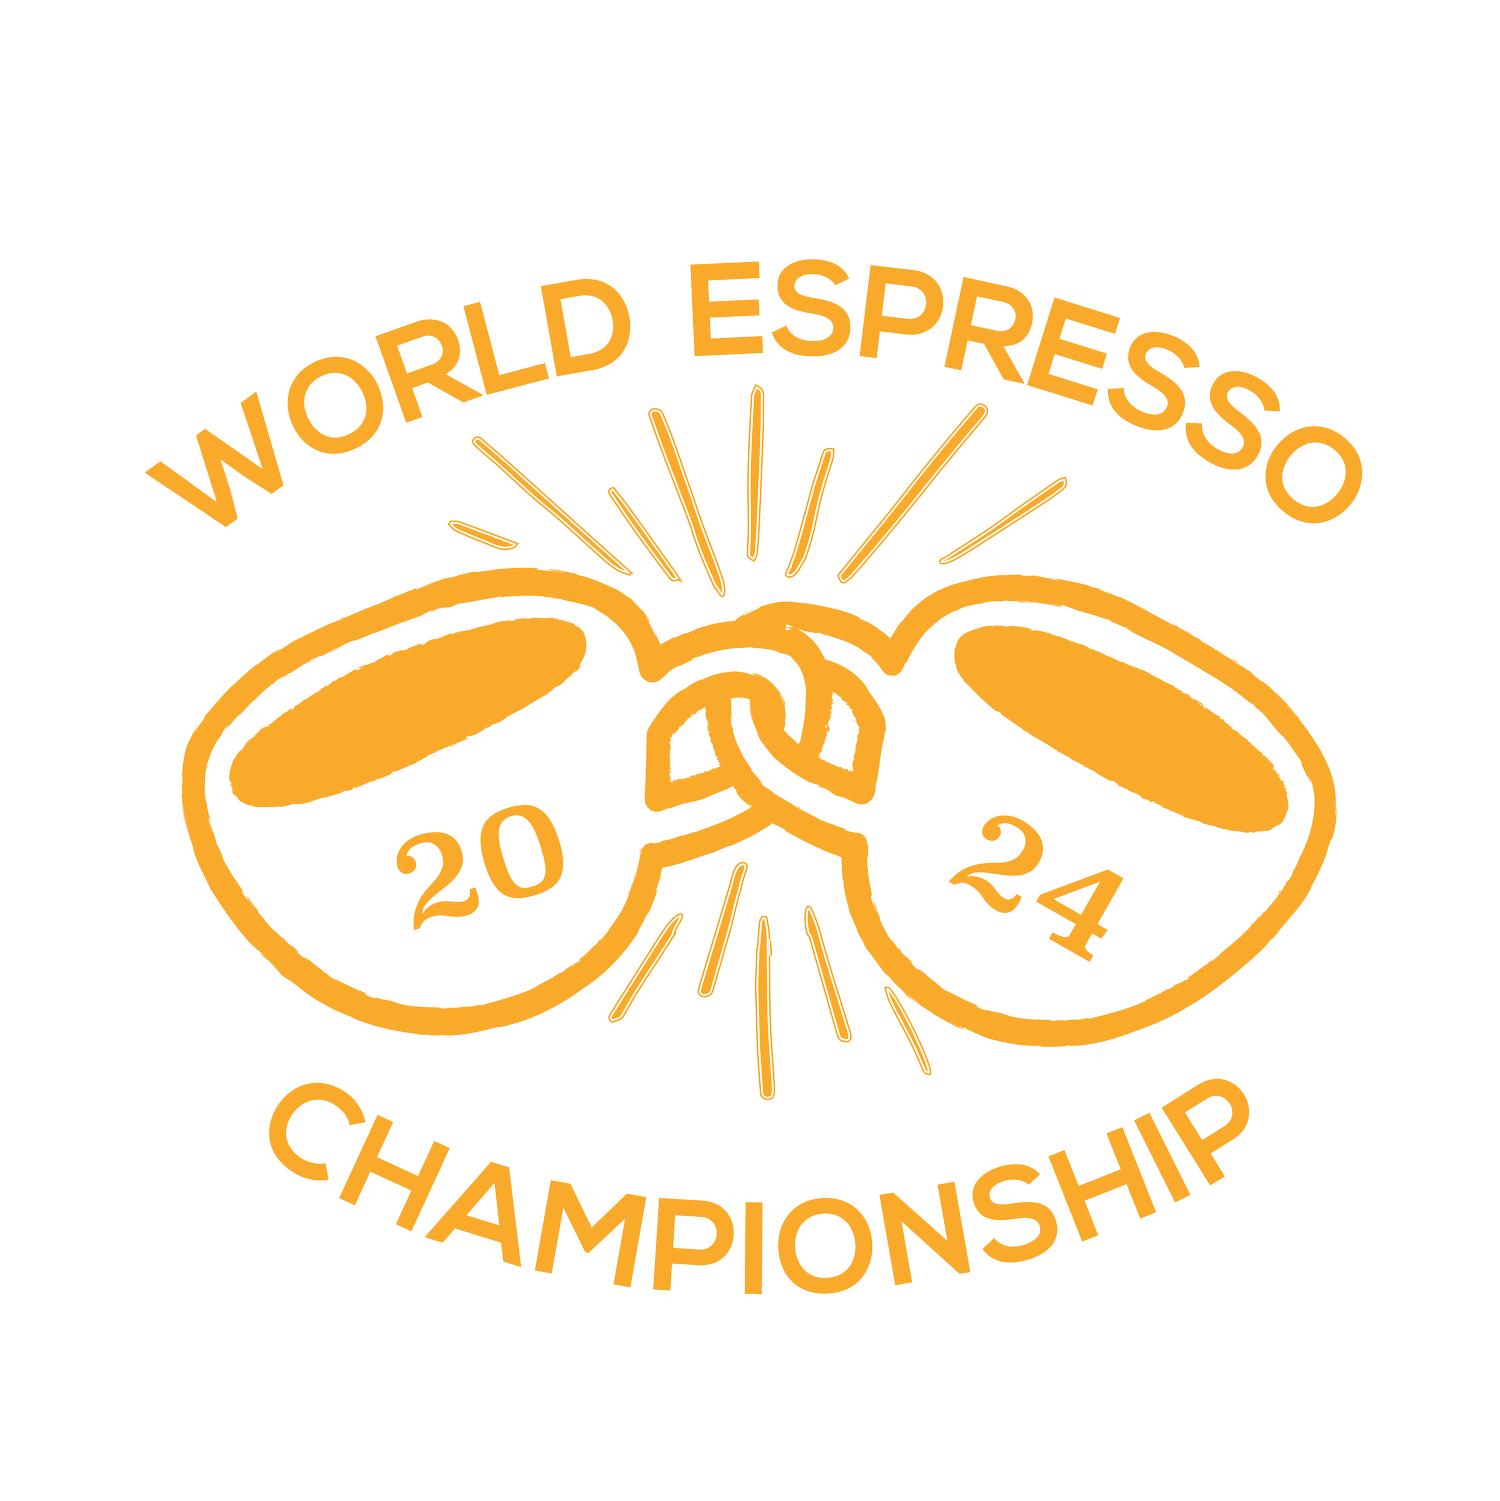 WORLD ESPRESSO CHAMPIONSHIP